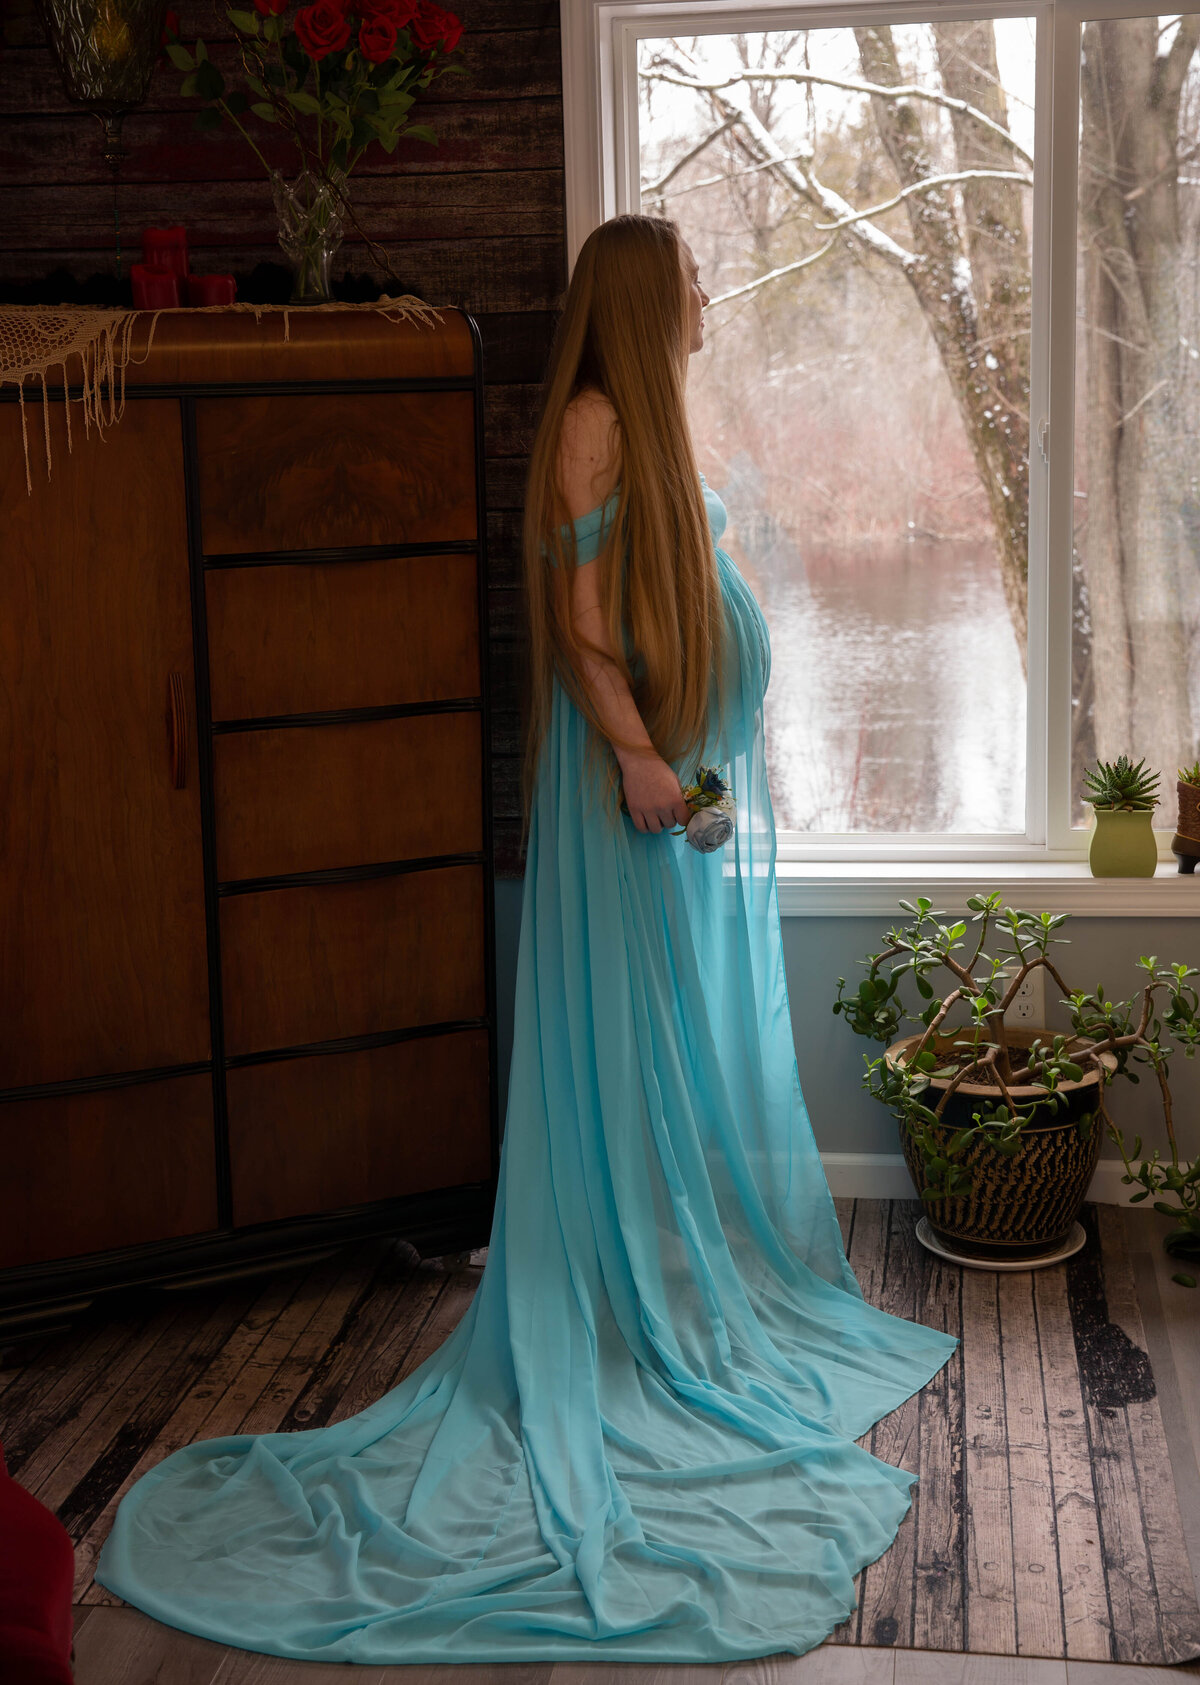 goddess studio maternity boudoir aqua dress water windowlight long blond hair